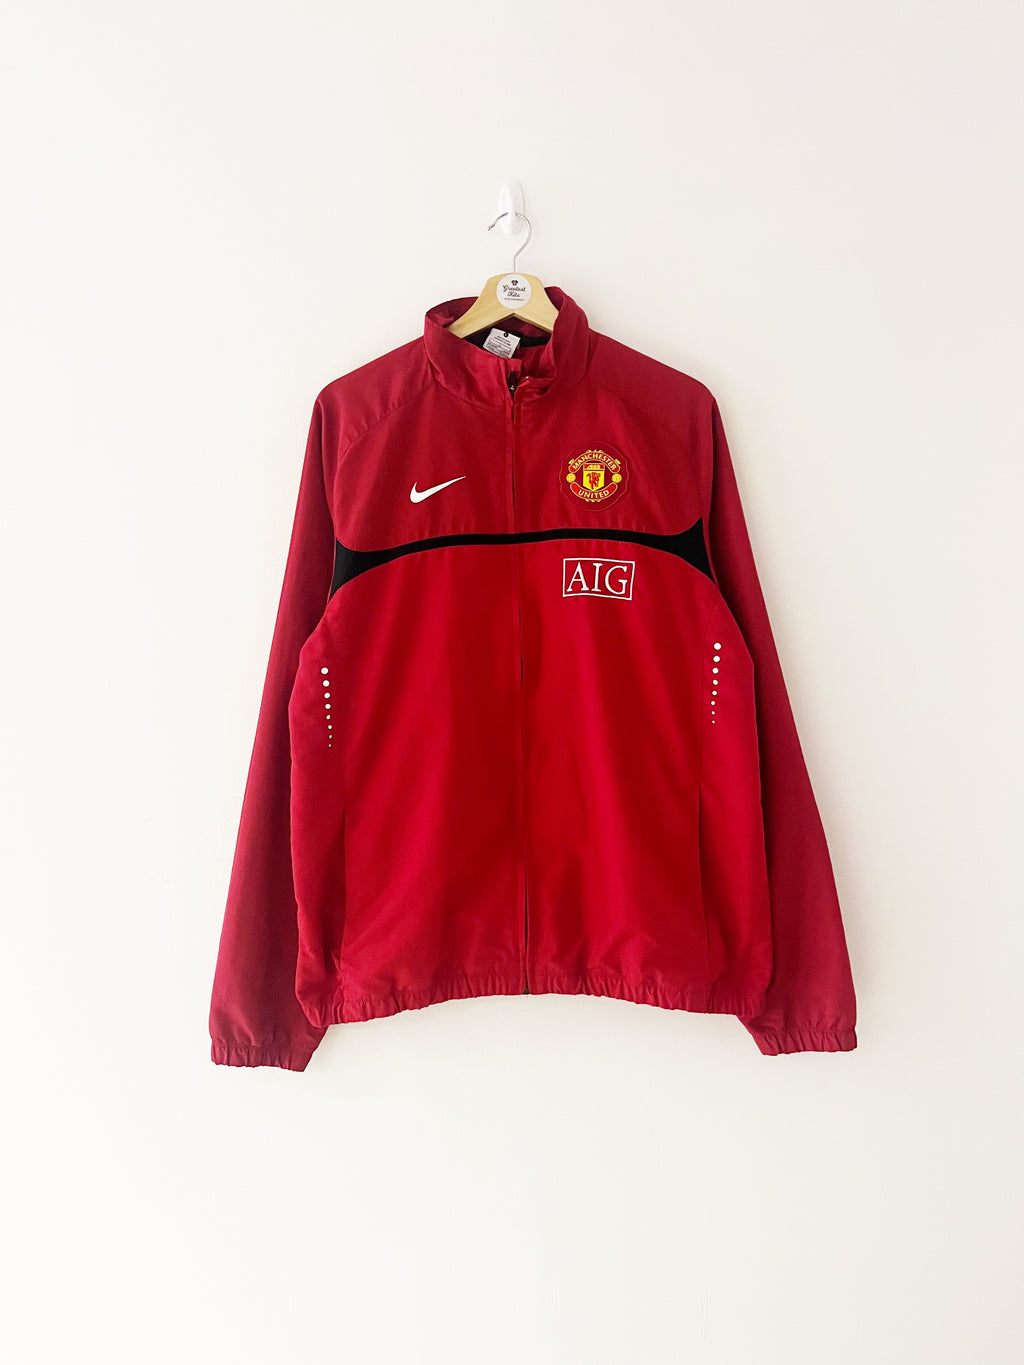 2009/10 Manchester United Training Jacket (L) 9/10